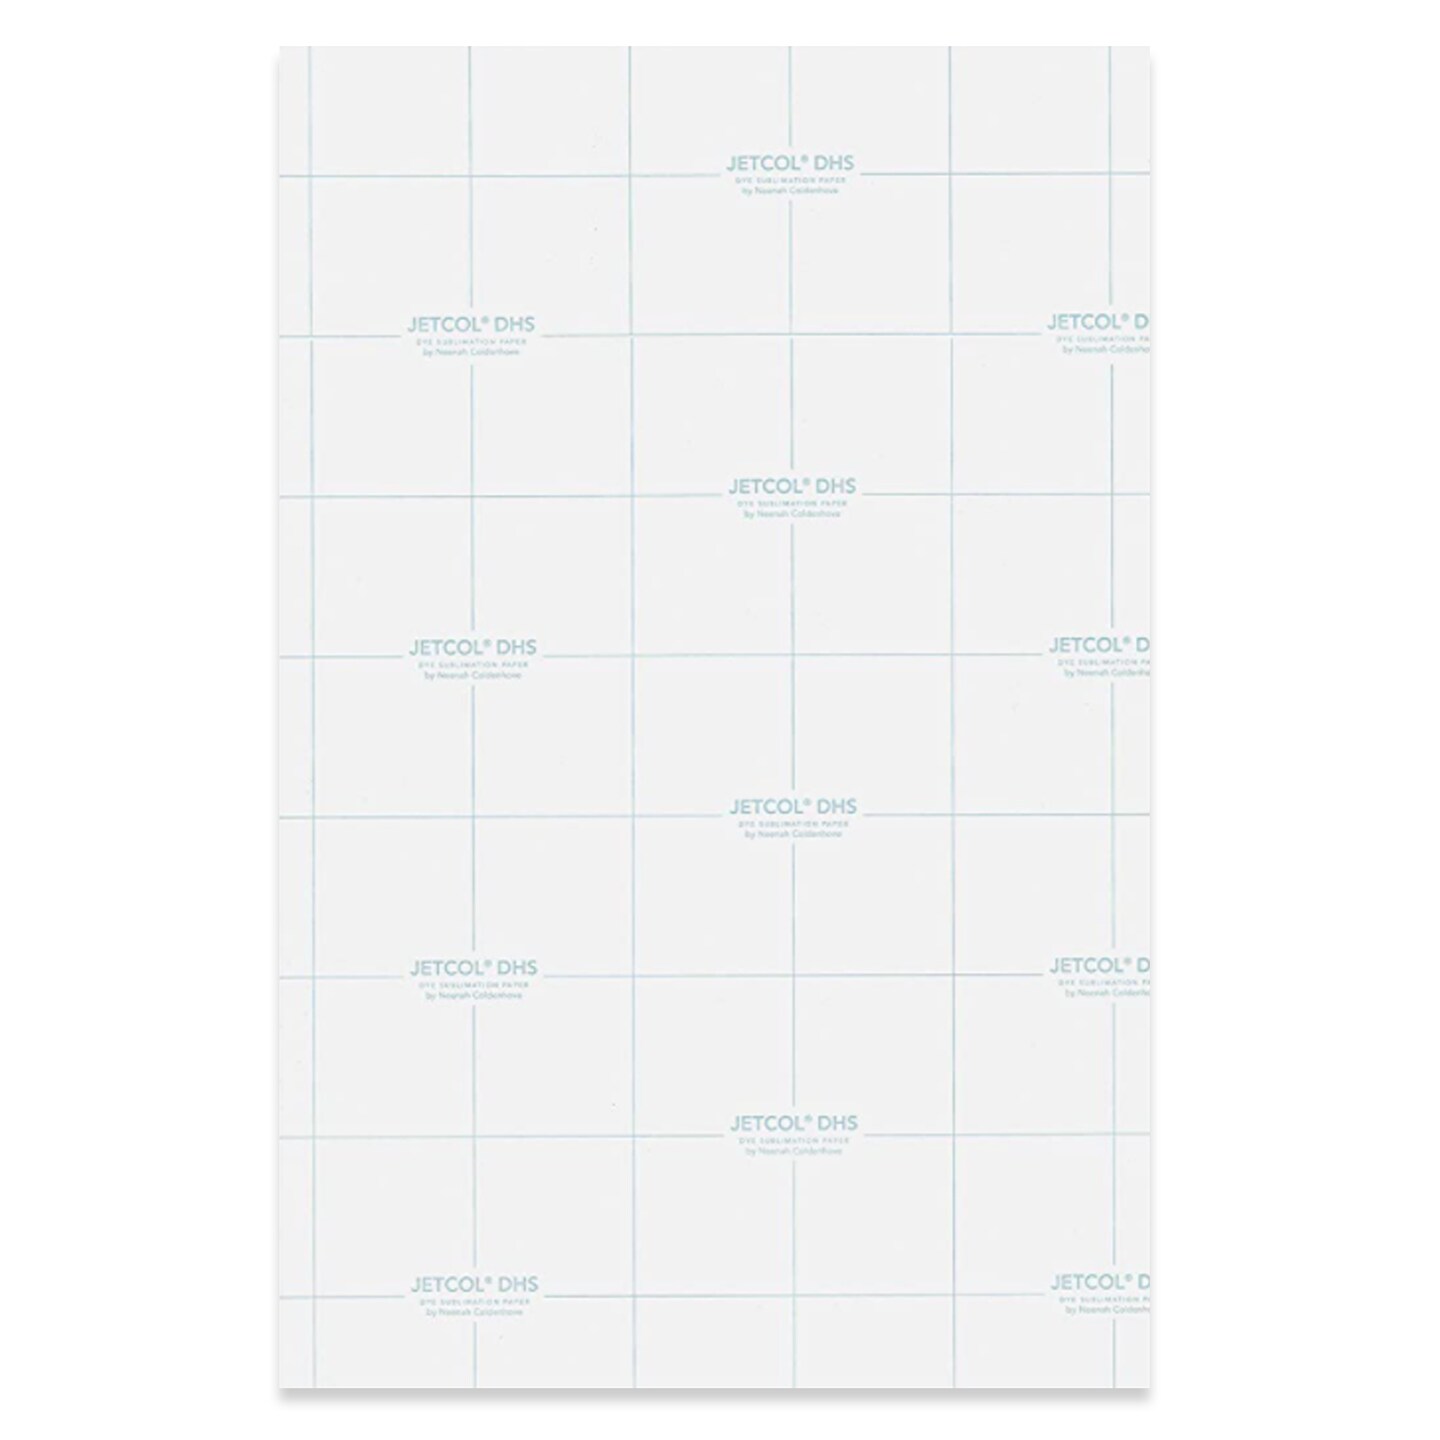 Full Line Sublimation Transfer Paper - Cut Sheets 100 PK